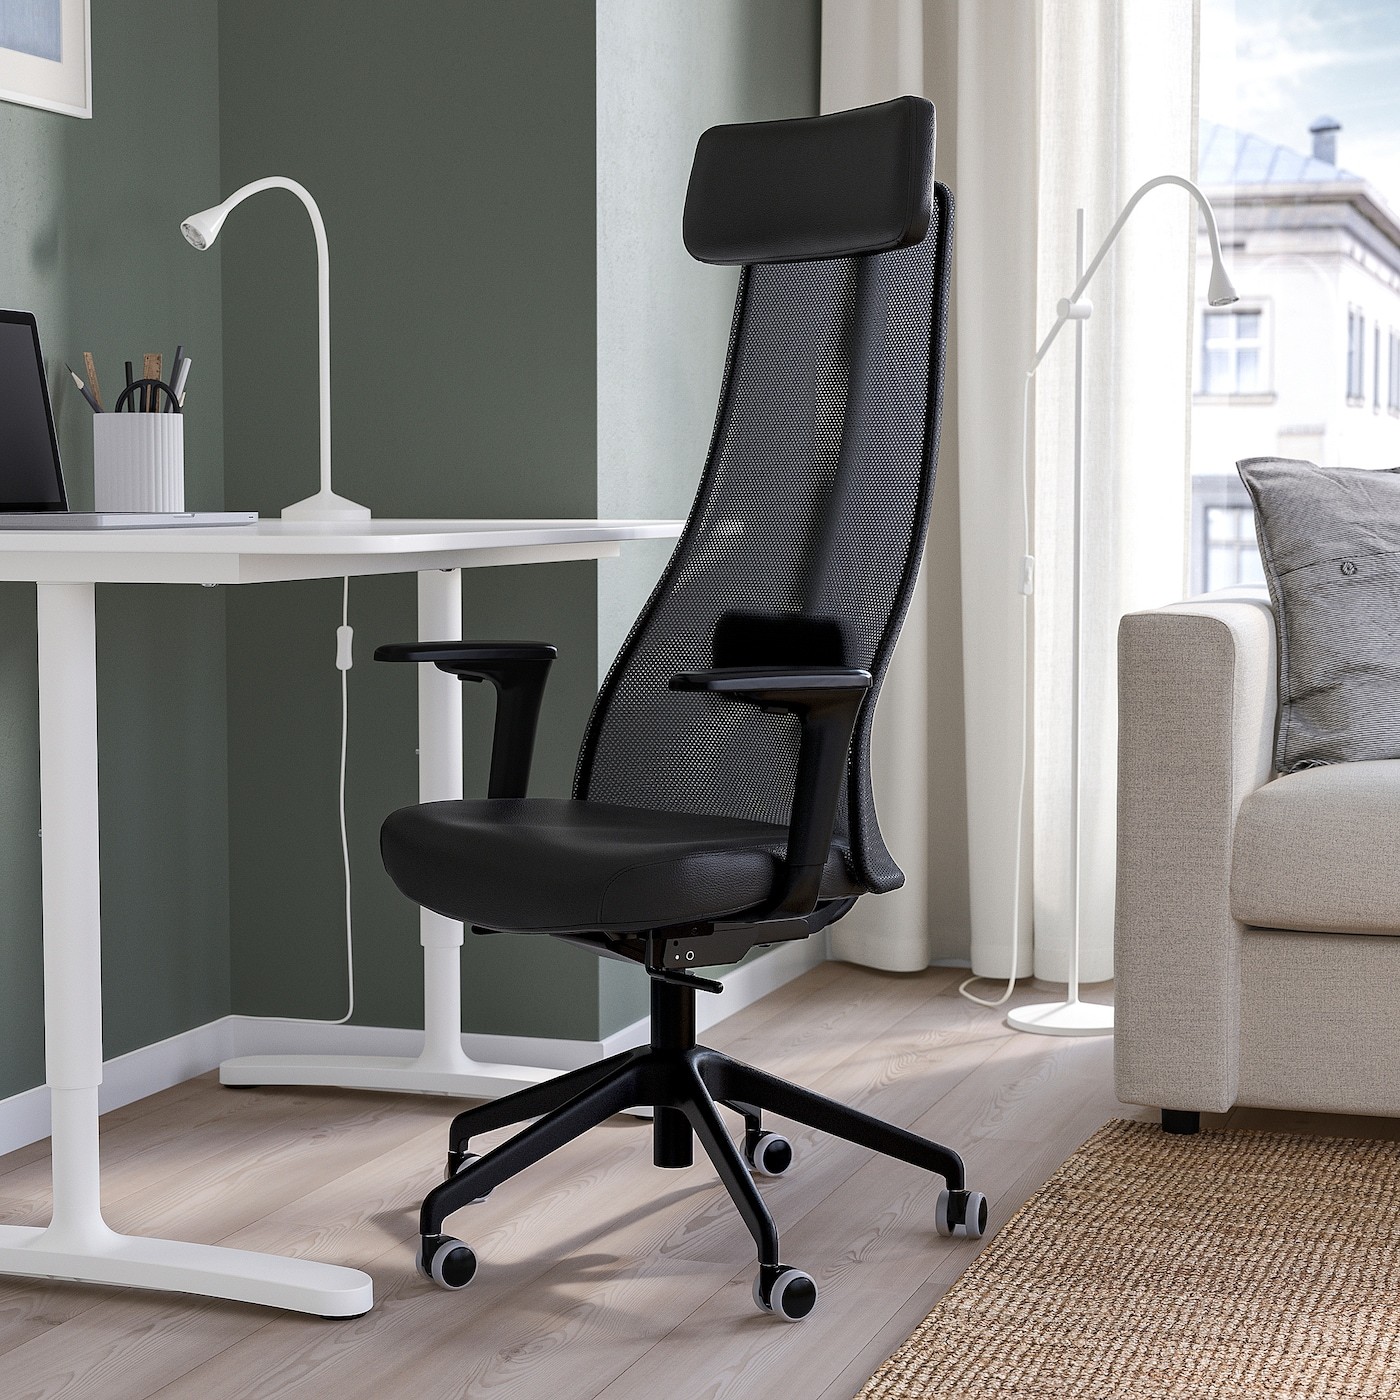 JÄRVFJÄLLET Office chair with armrests